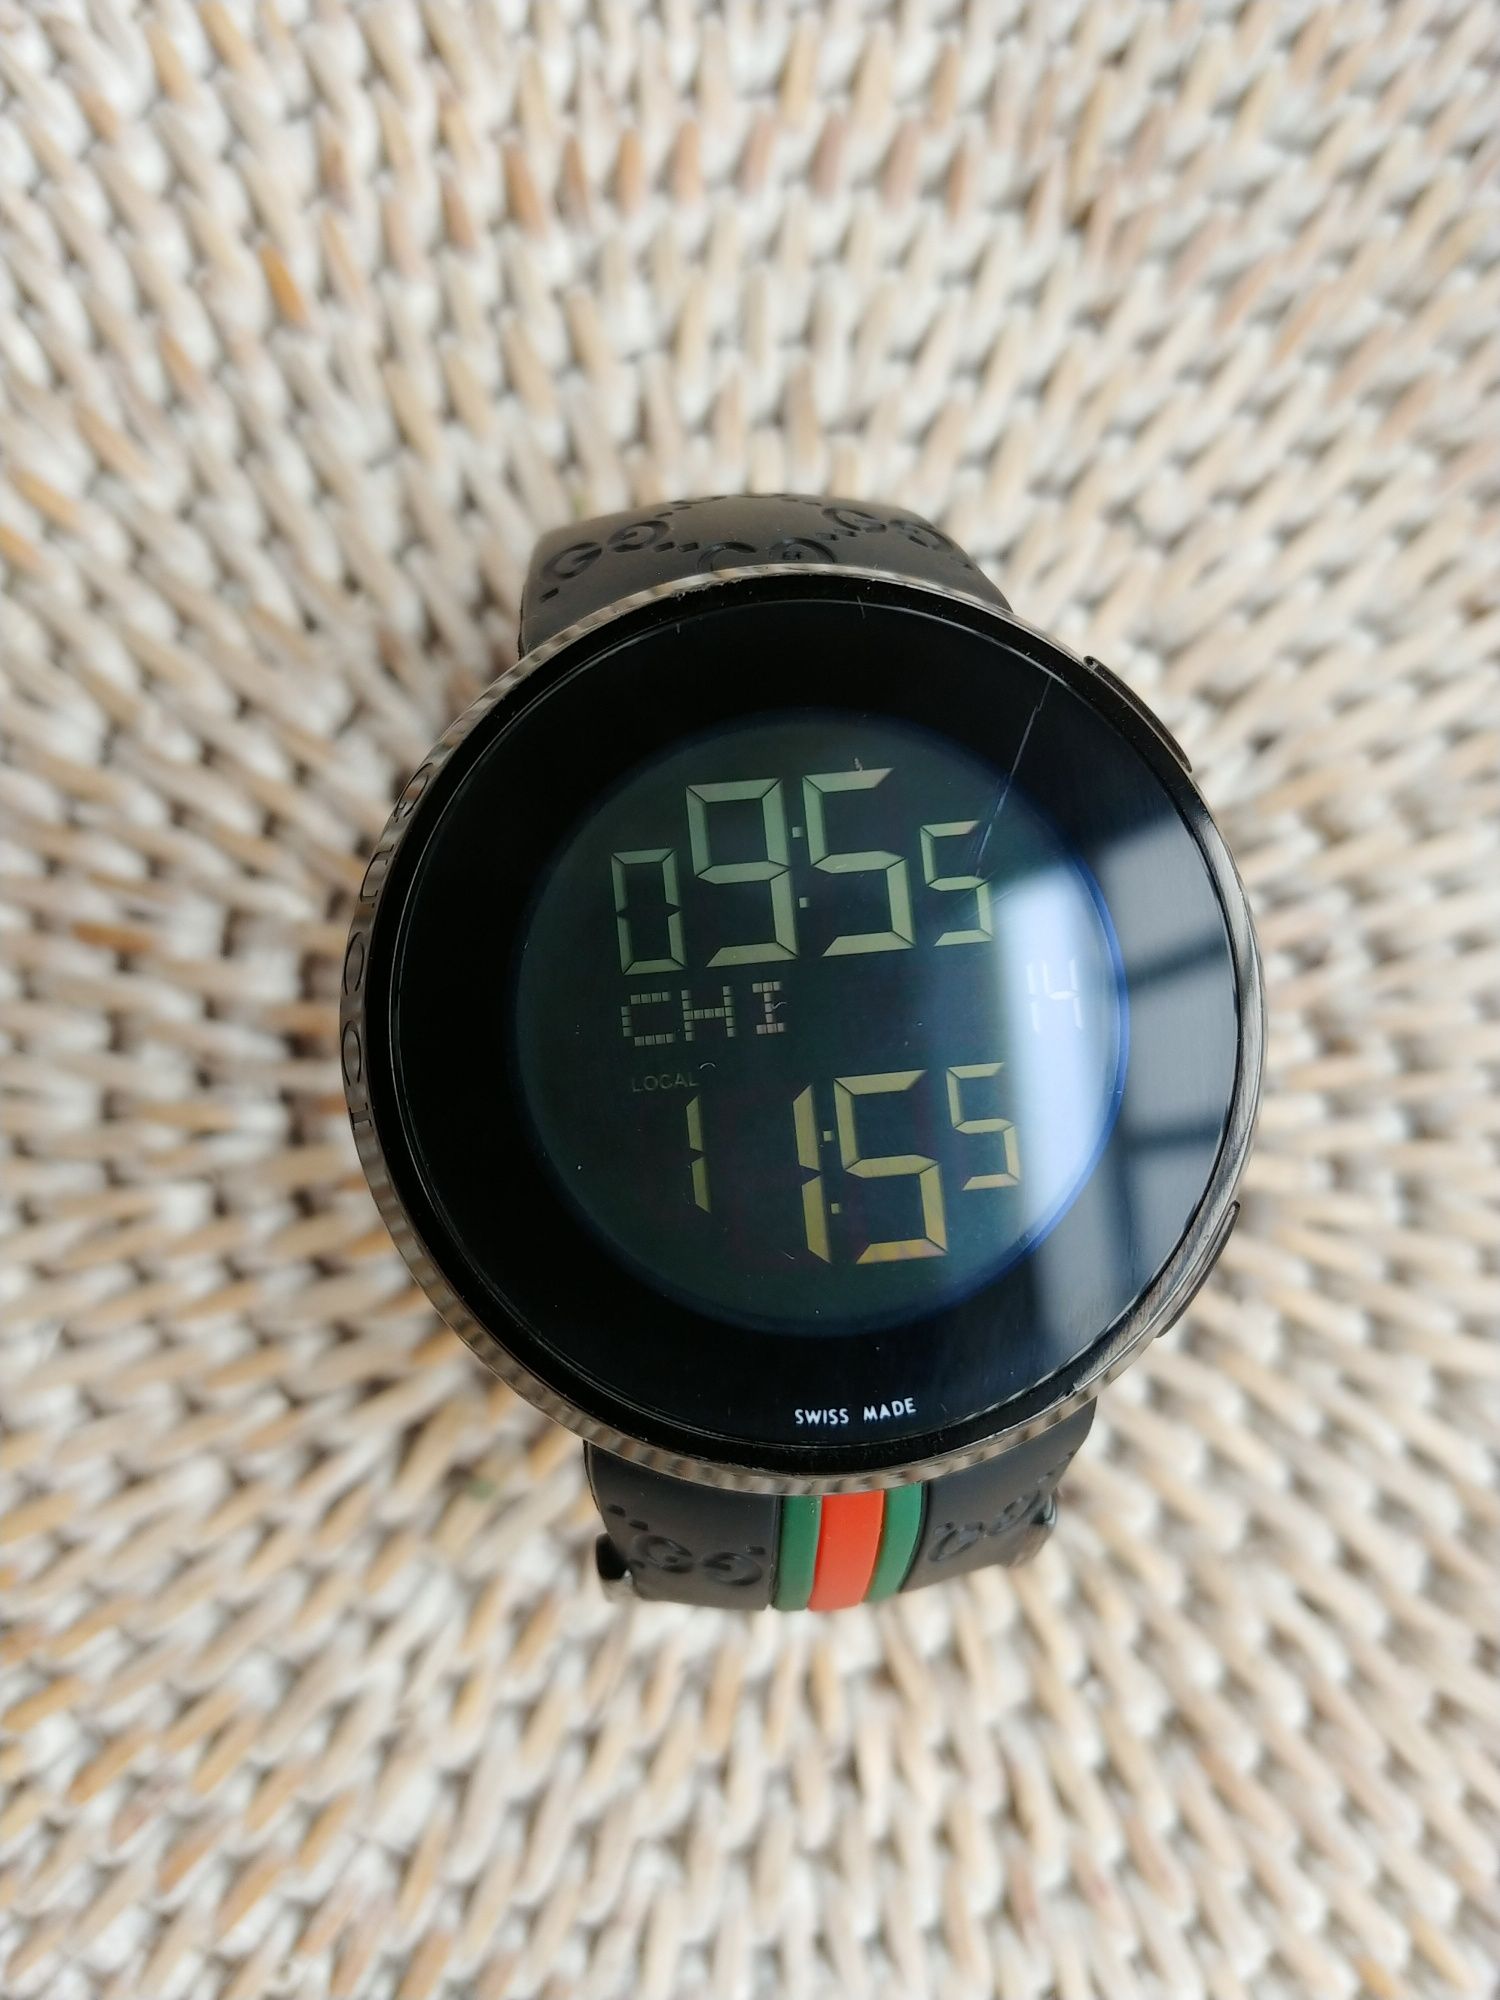 Чоловічий цифровий годинник Gucci I-Gucci Digital Black Rubber YA11420